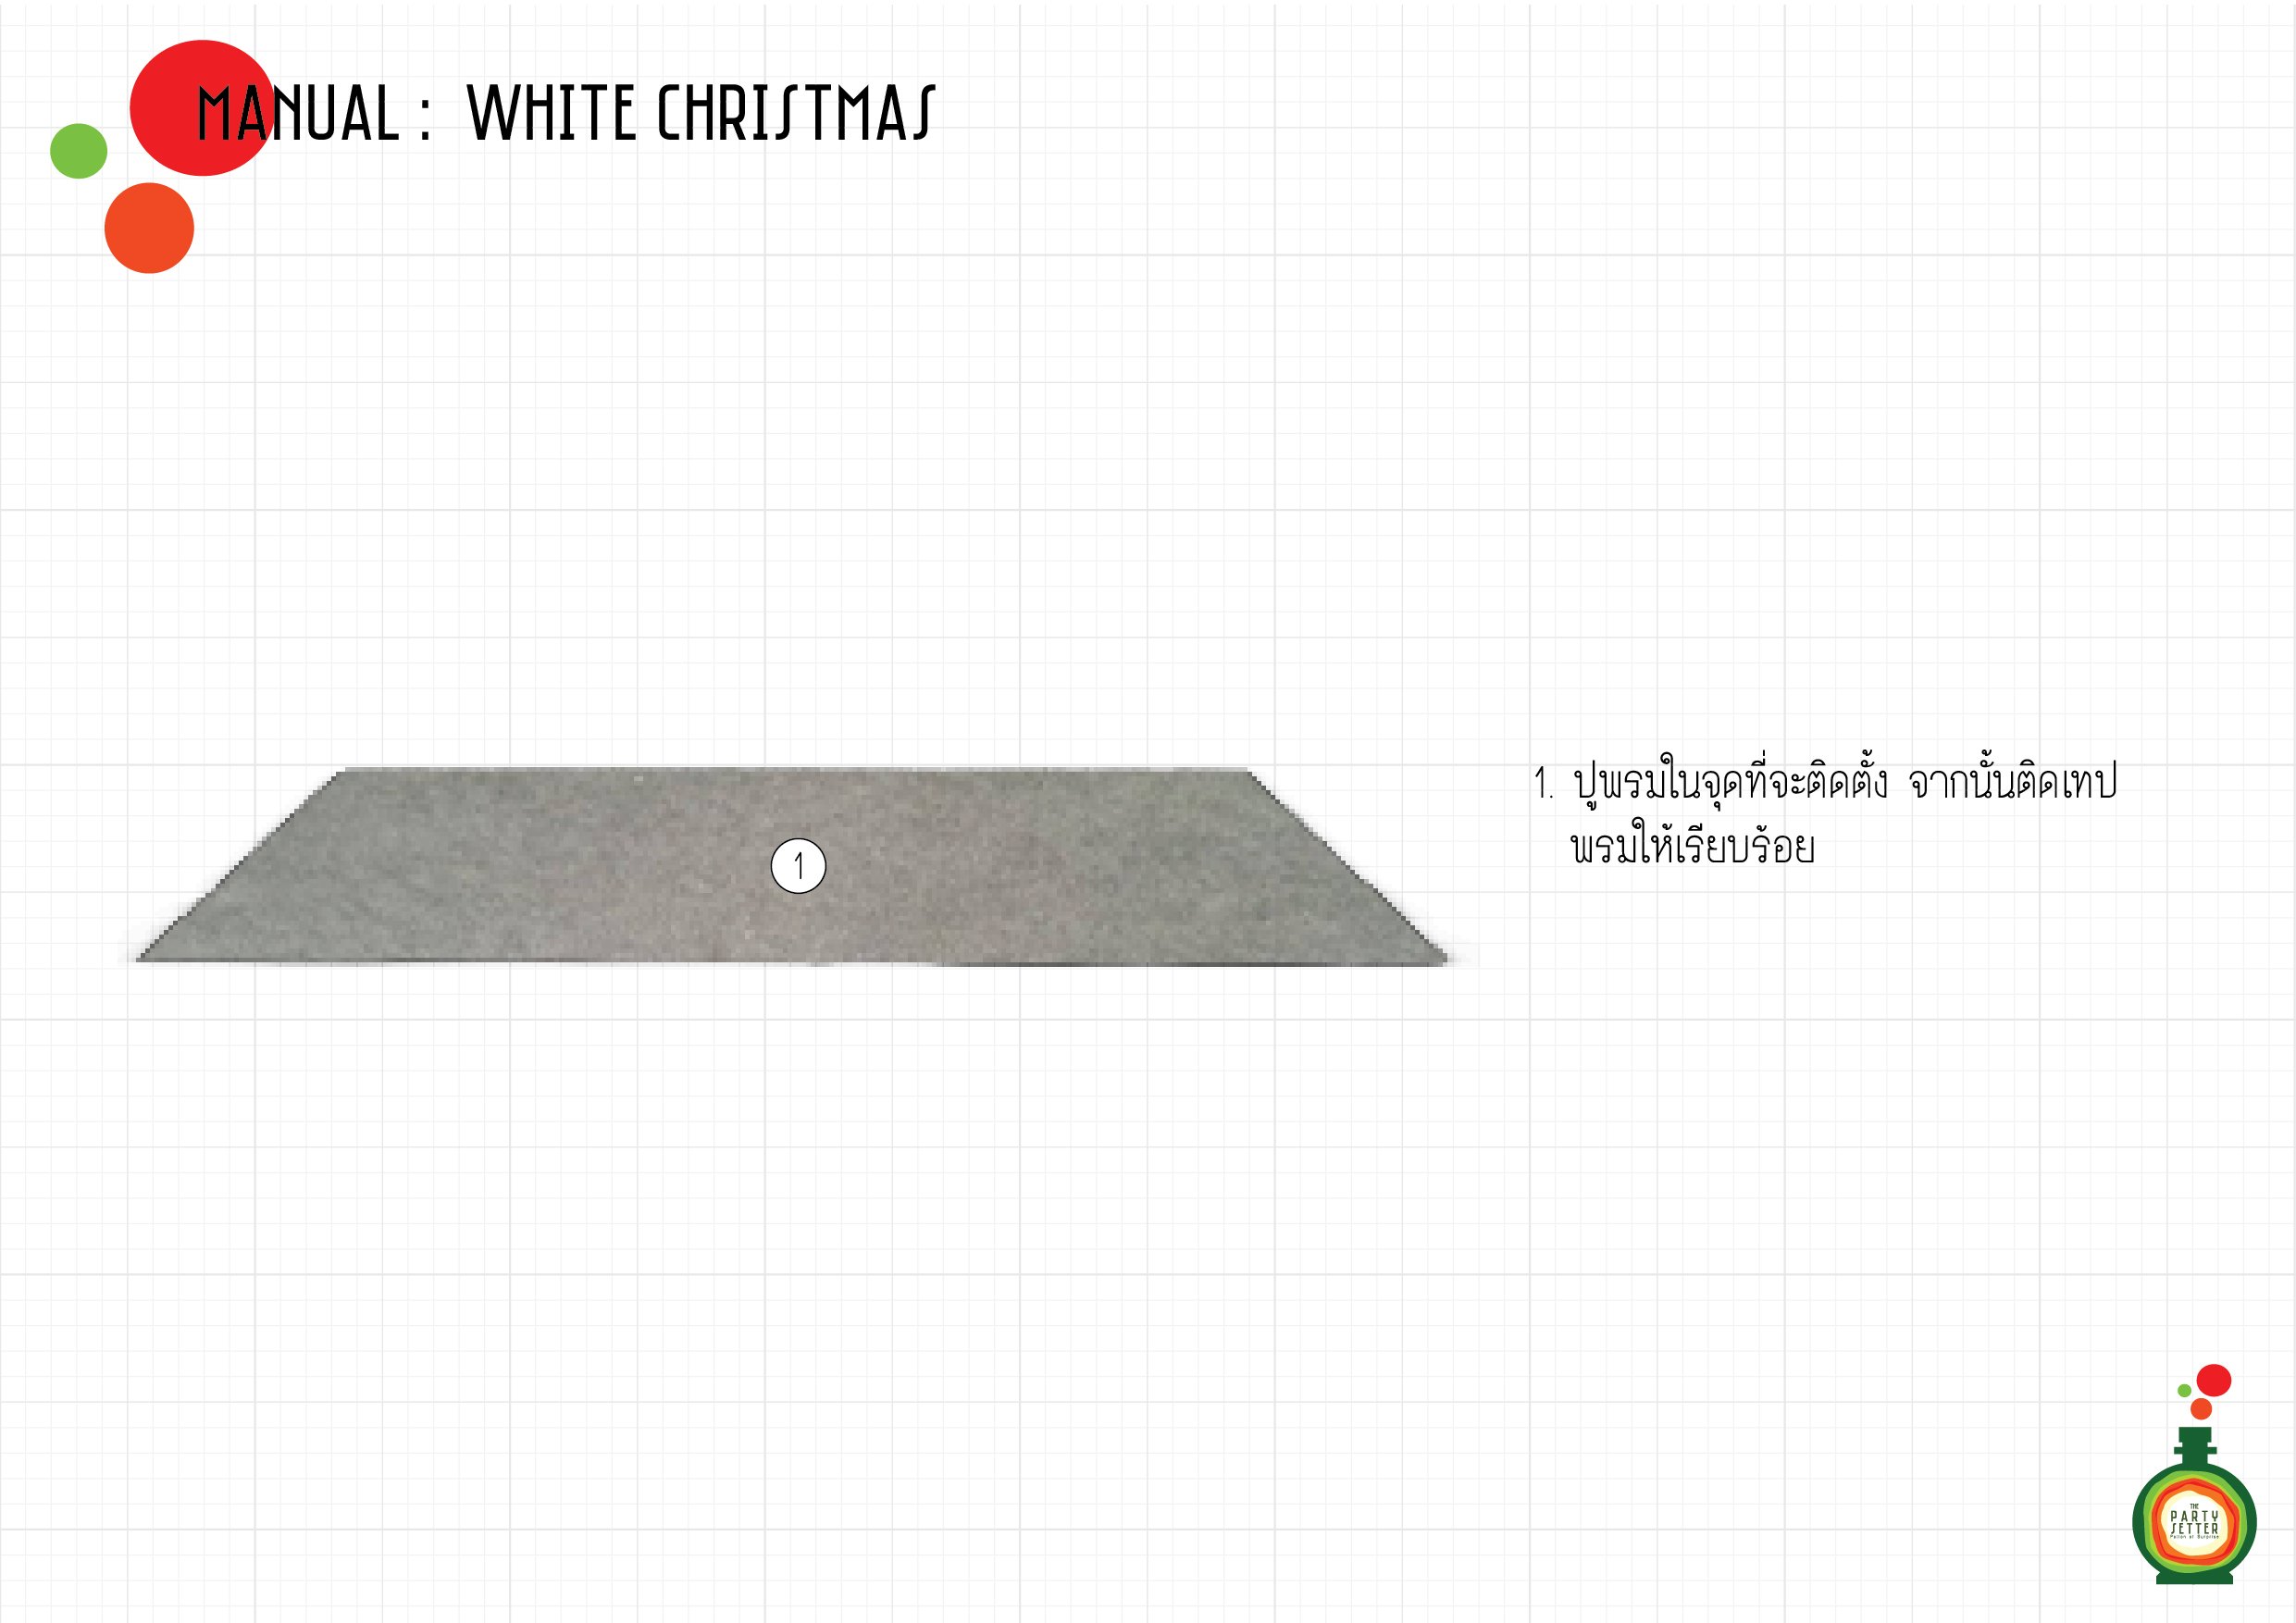 Manual_White Christmas-01-01.jpg